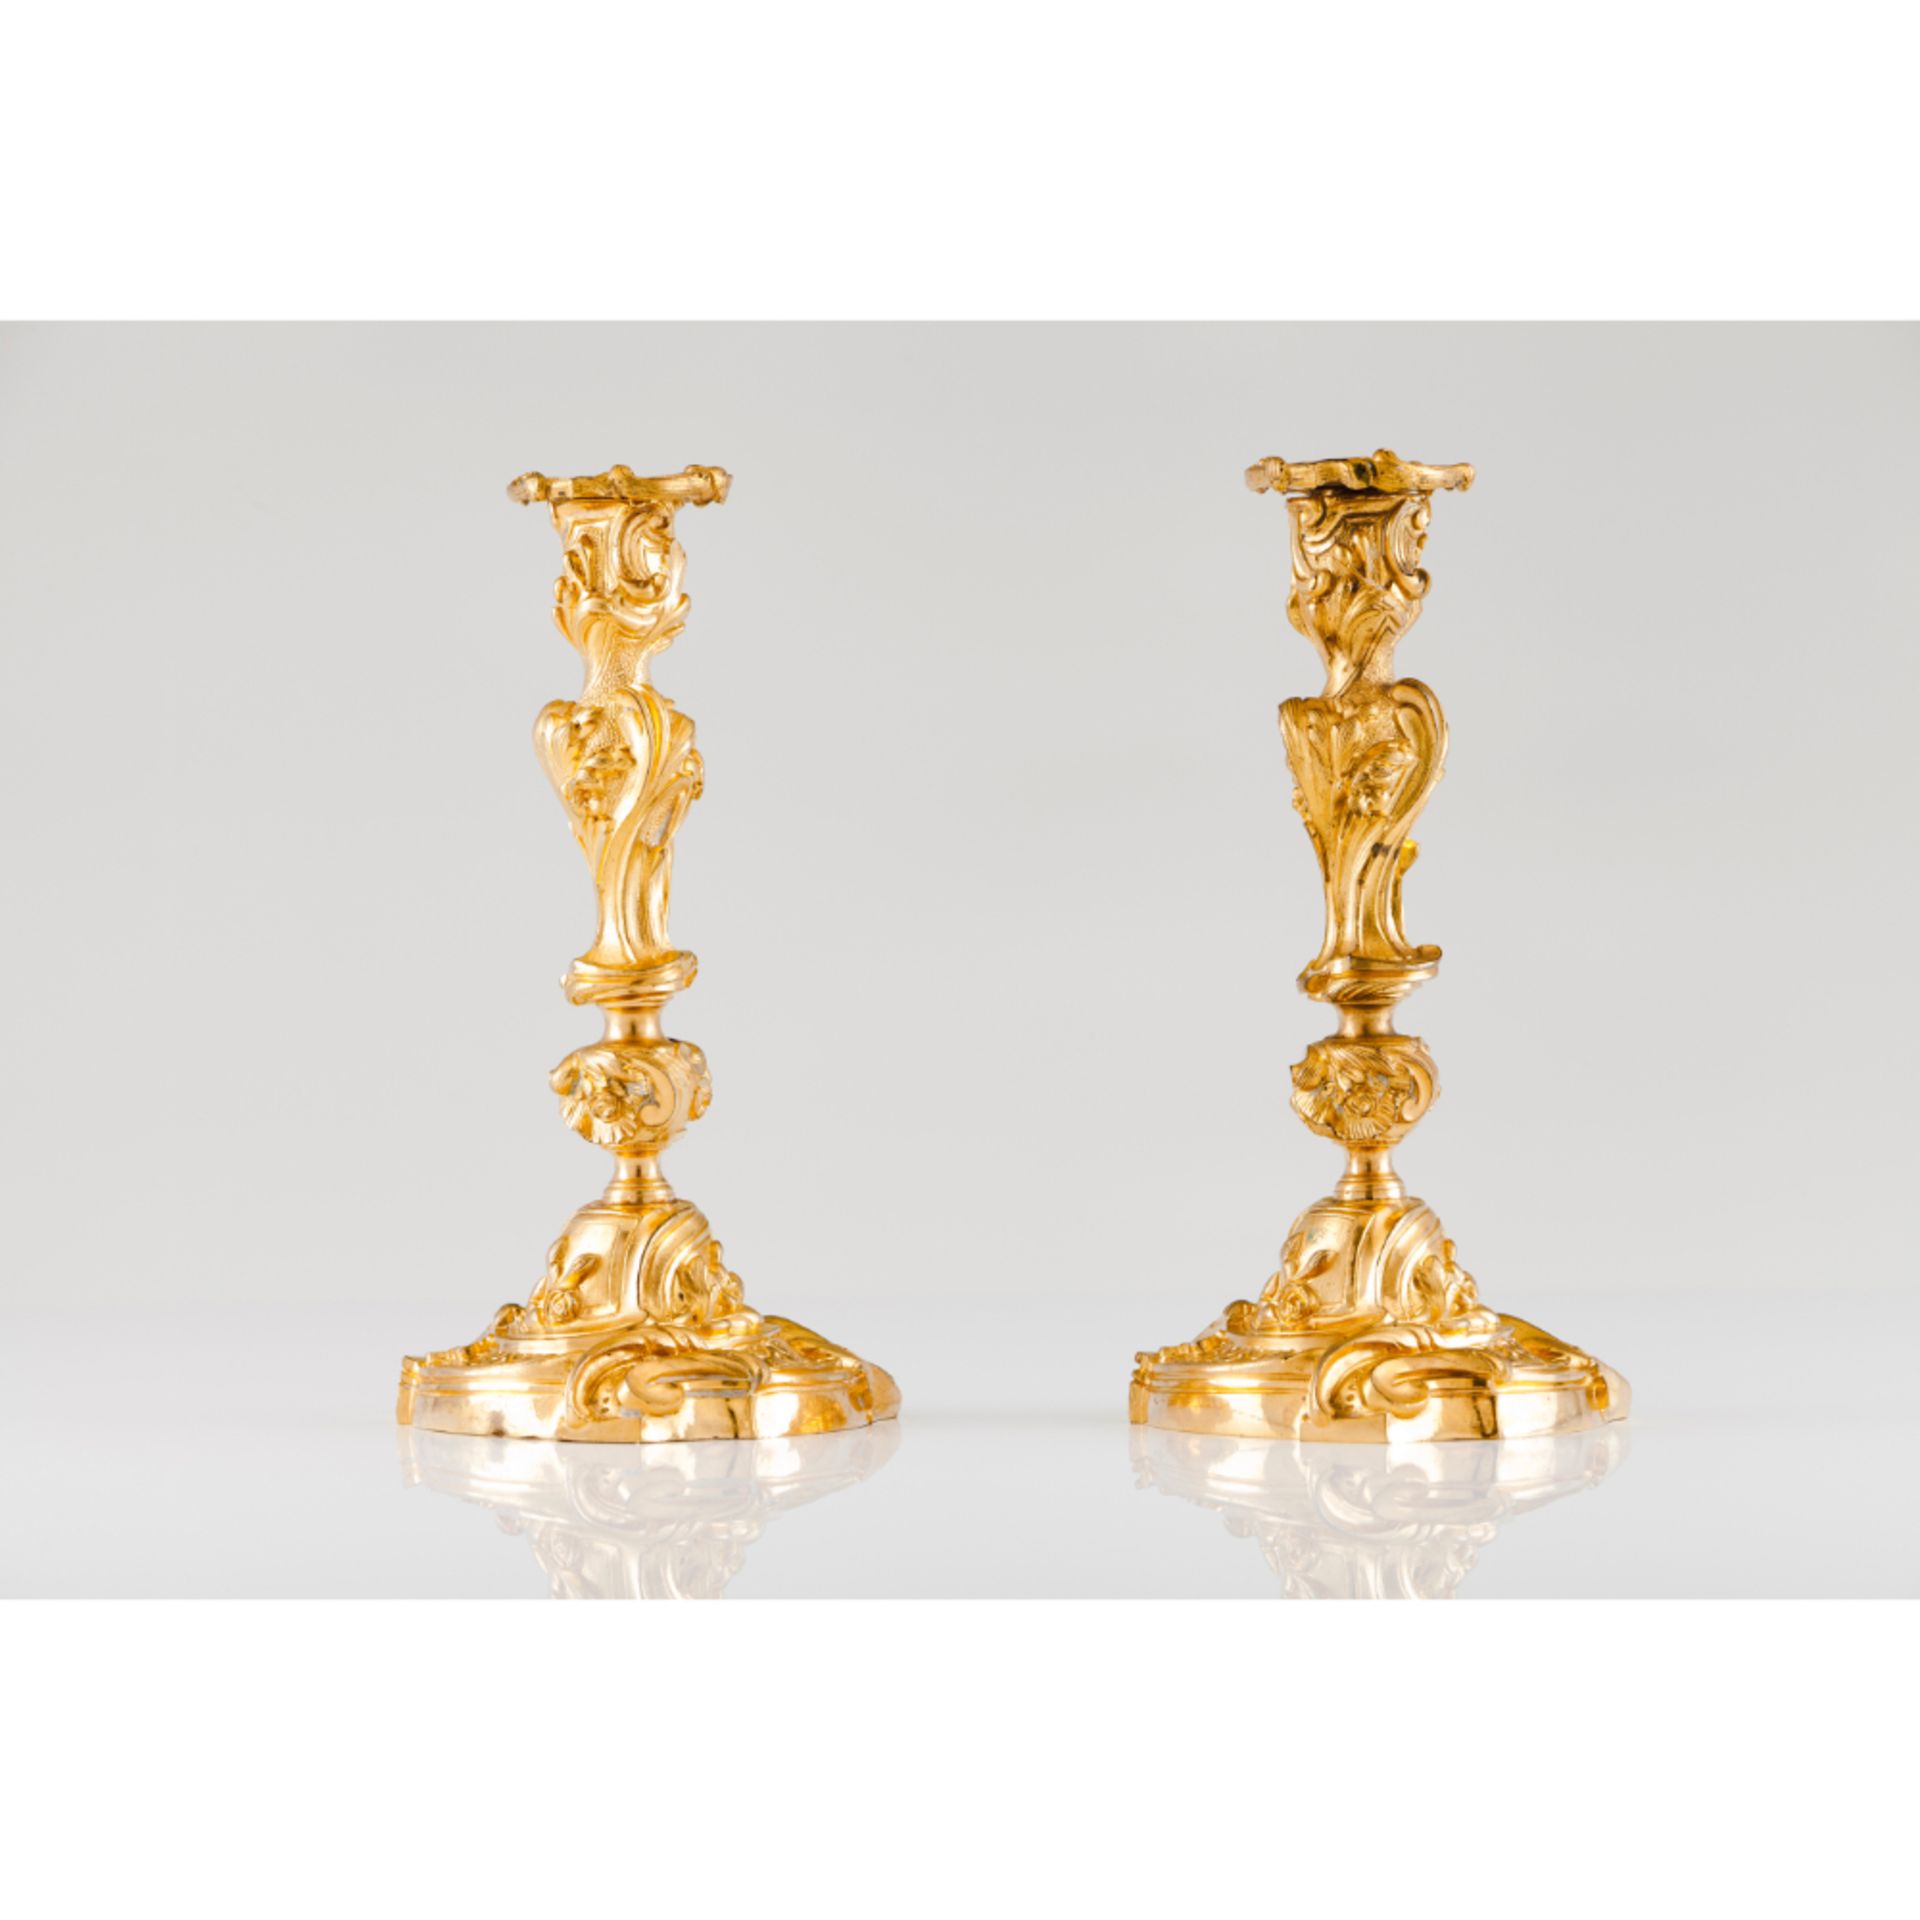 A pair of Louis XV candlesticks